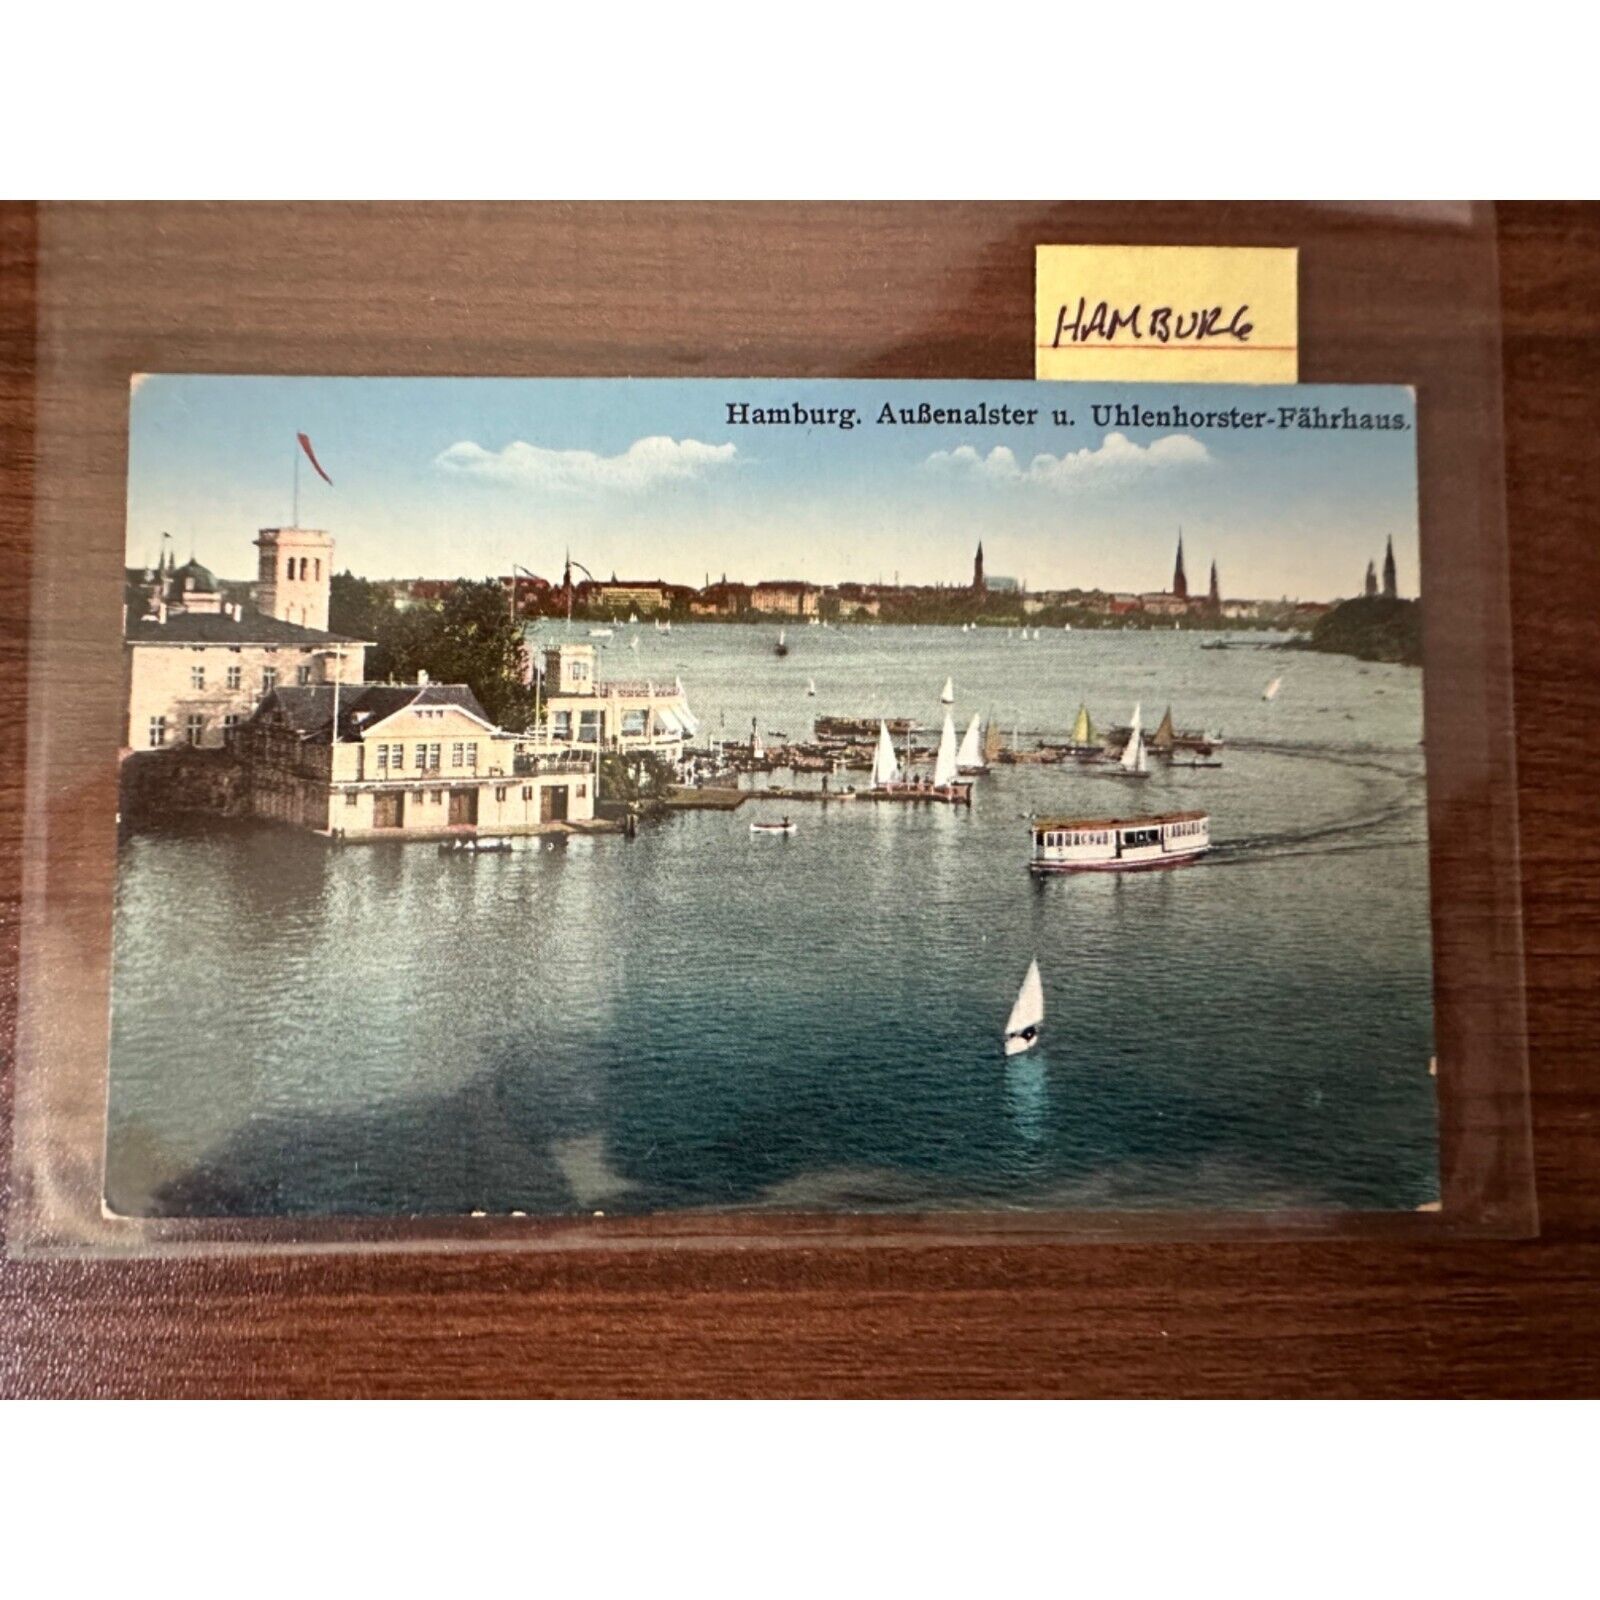 Germany Postcard Hamburg Aubenalster u Uhlenhorster Fahrhaus #91